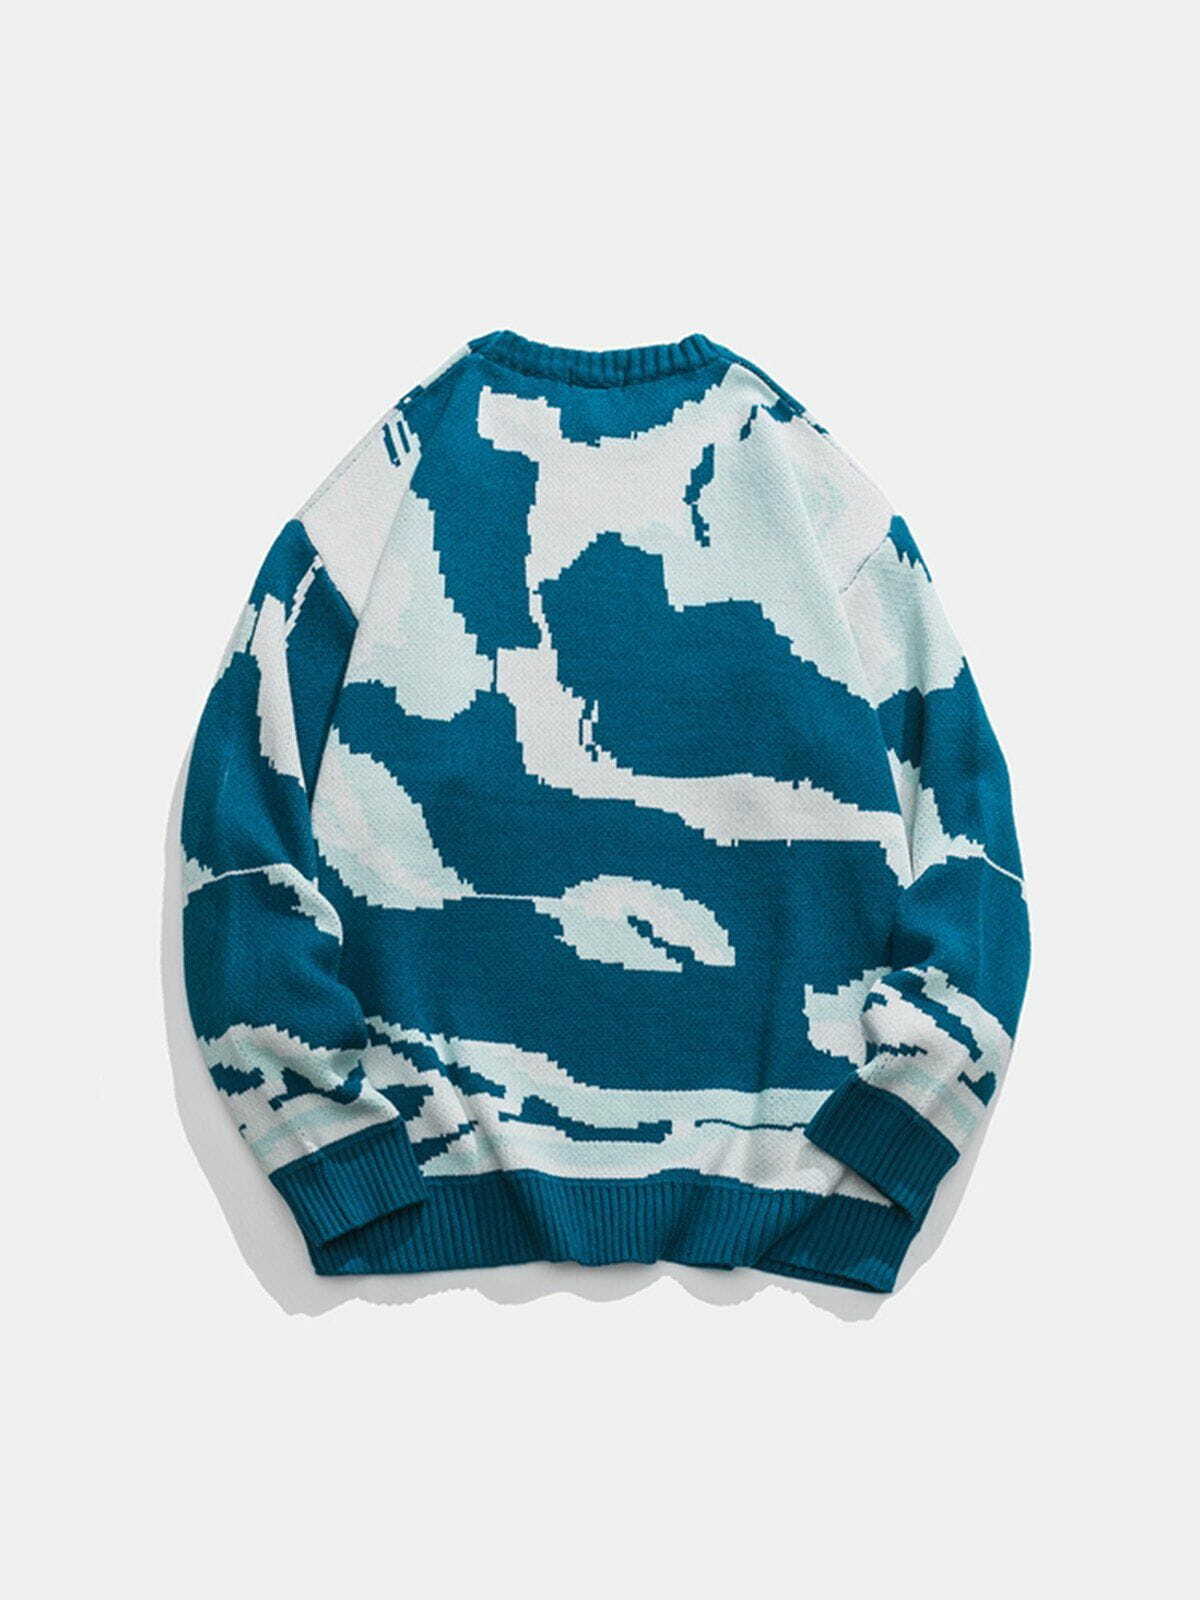 gradient color block sweater edgy streetwear essential 3461